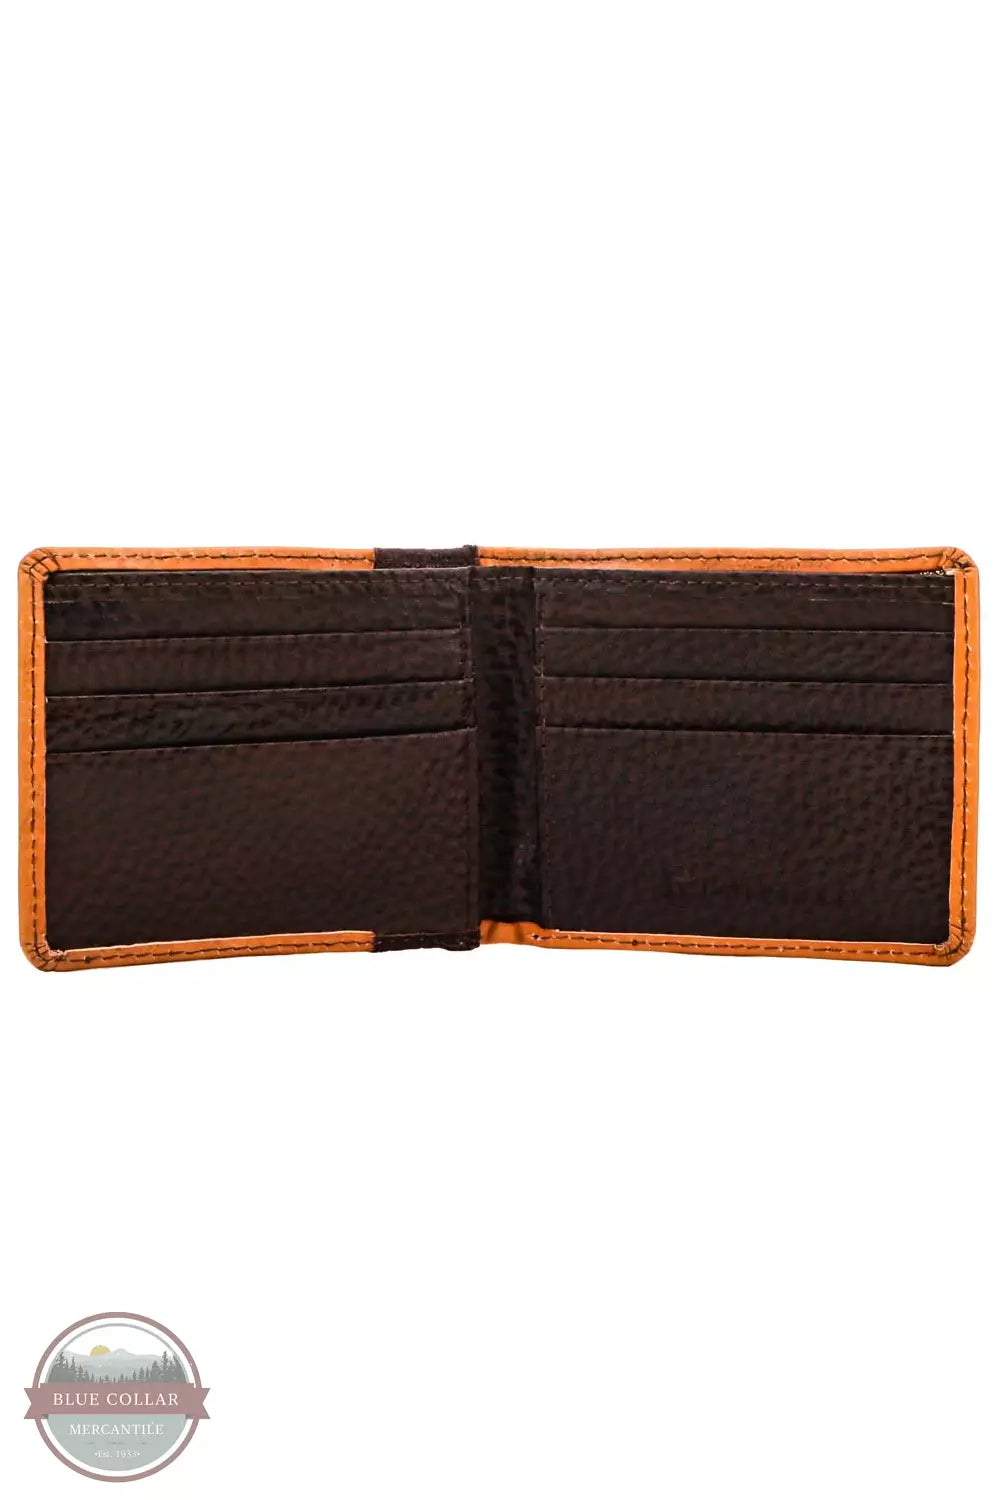 Hooey HBF008-TNBR Top Notch Tooled Bi-Fold Wallet in Tan/Brown/Ivory Inside View